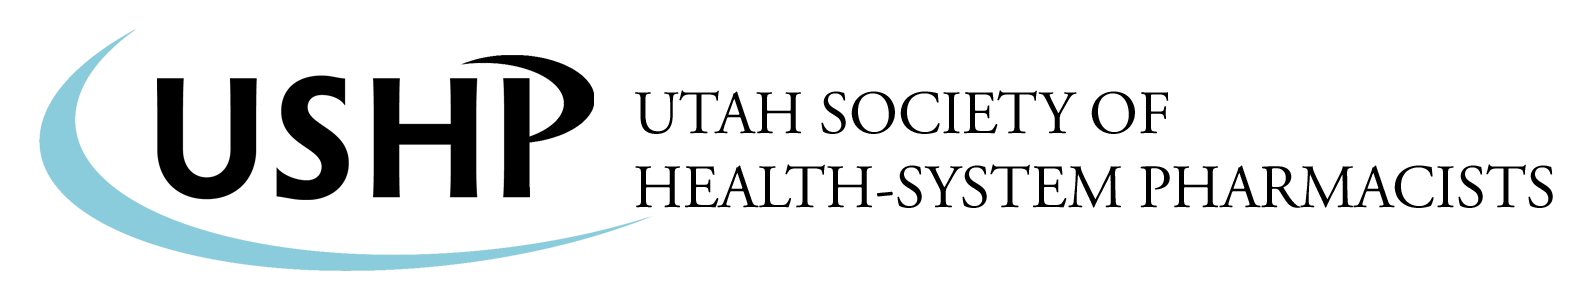 ushp-logo-horizontal-color